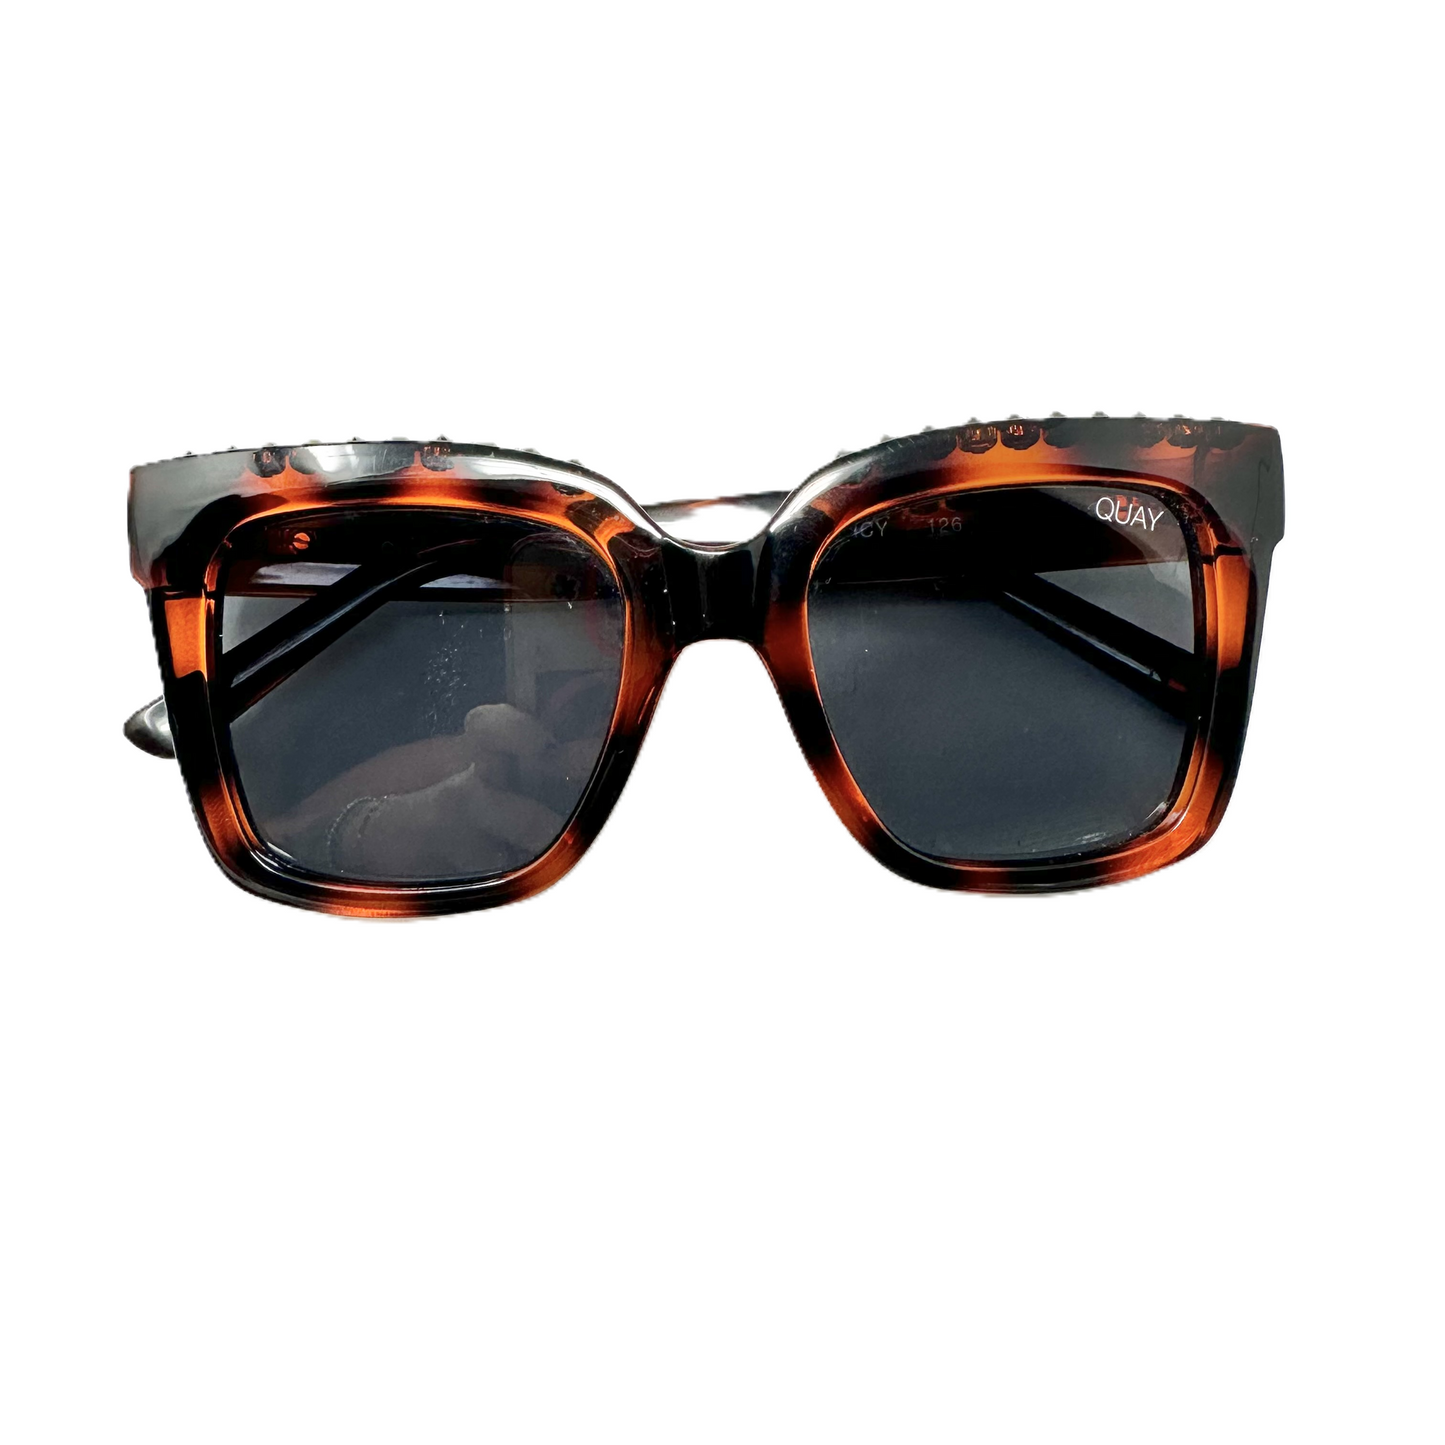 Sunglasses By Quay